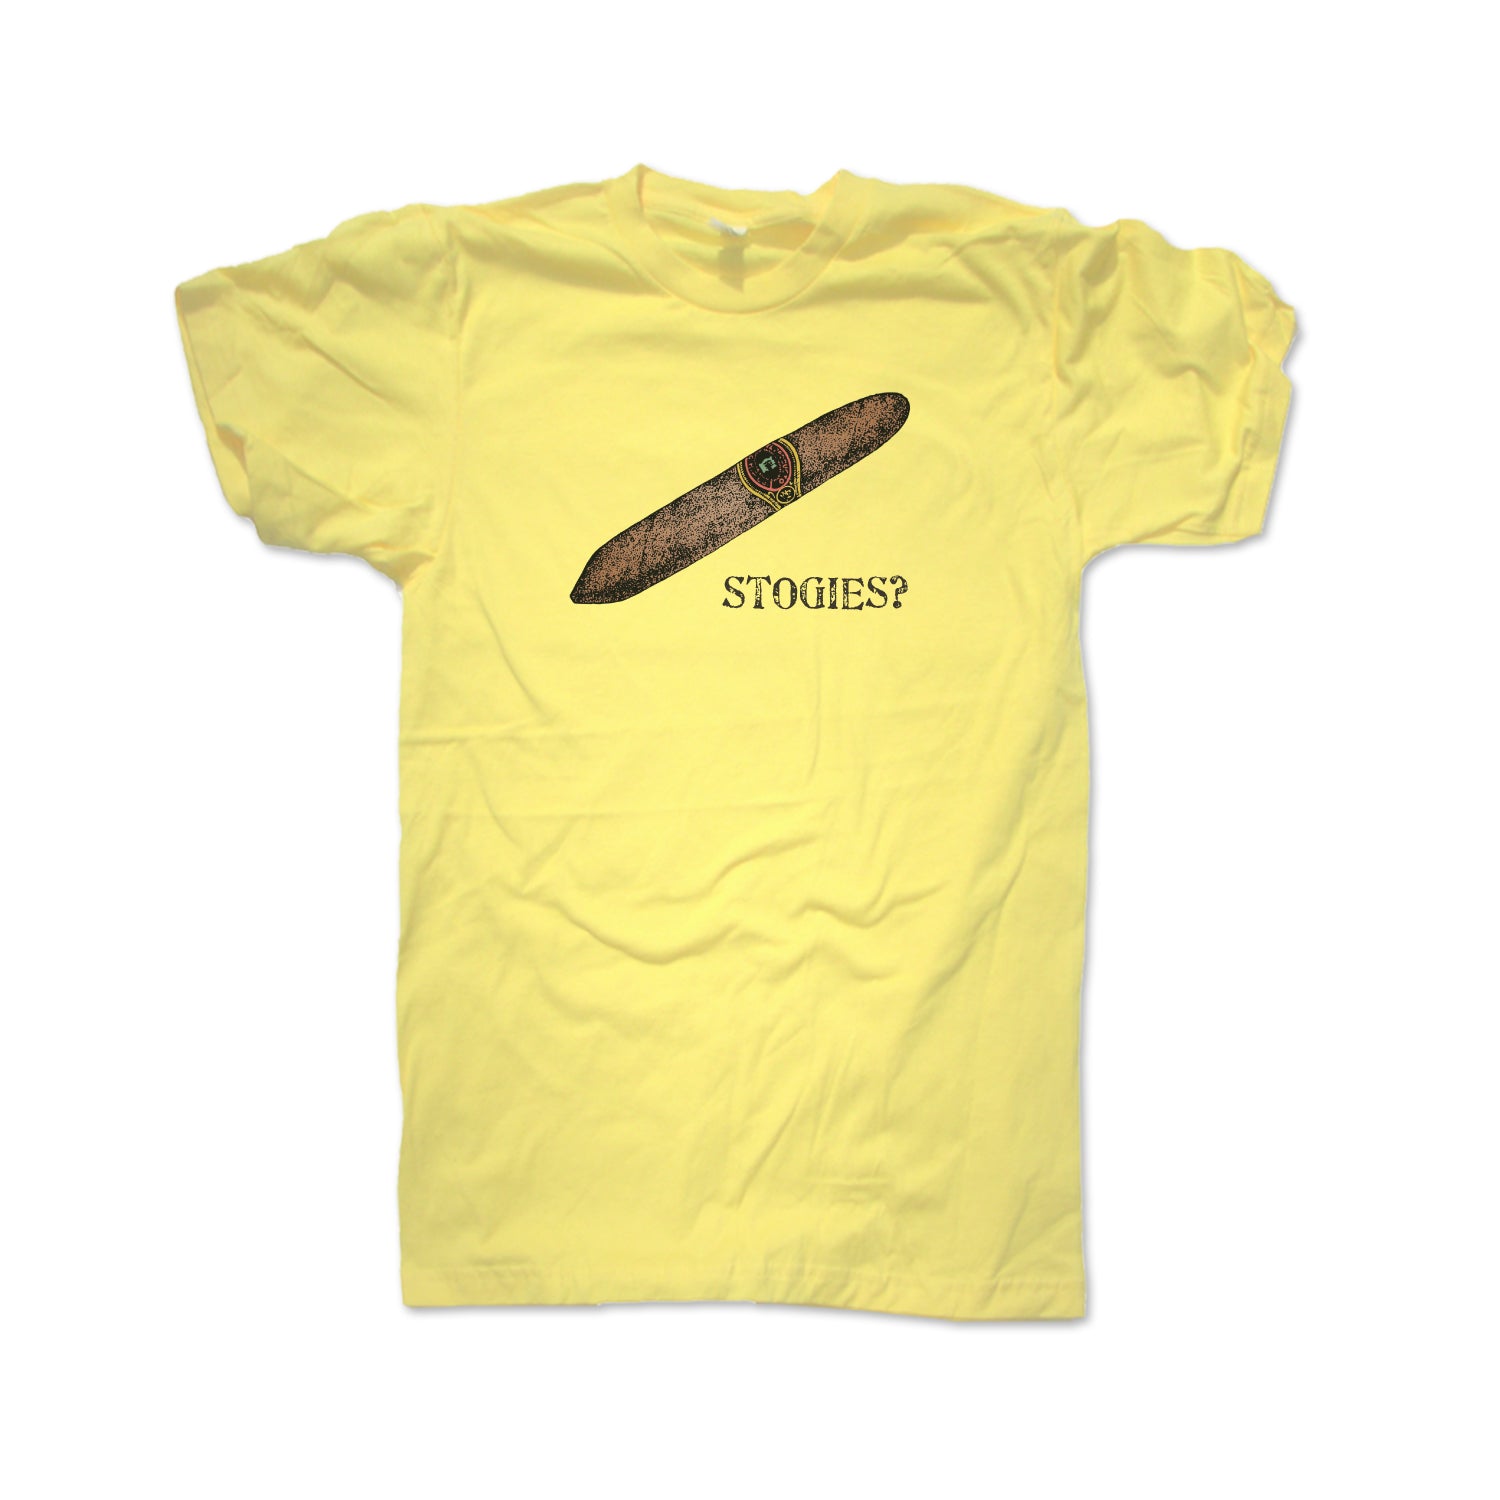 Yellow Movie shirt Stogies? why not wedding crashers funny shirt